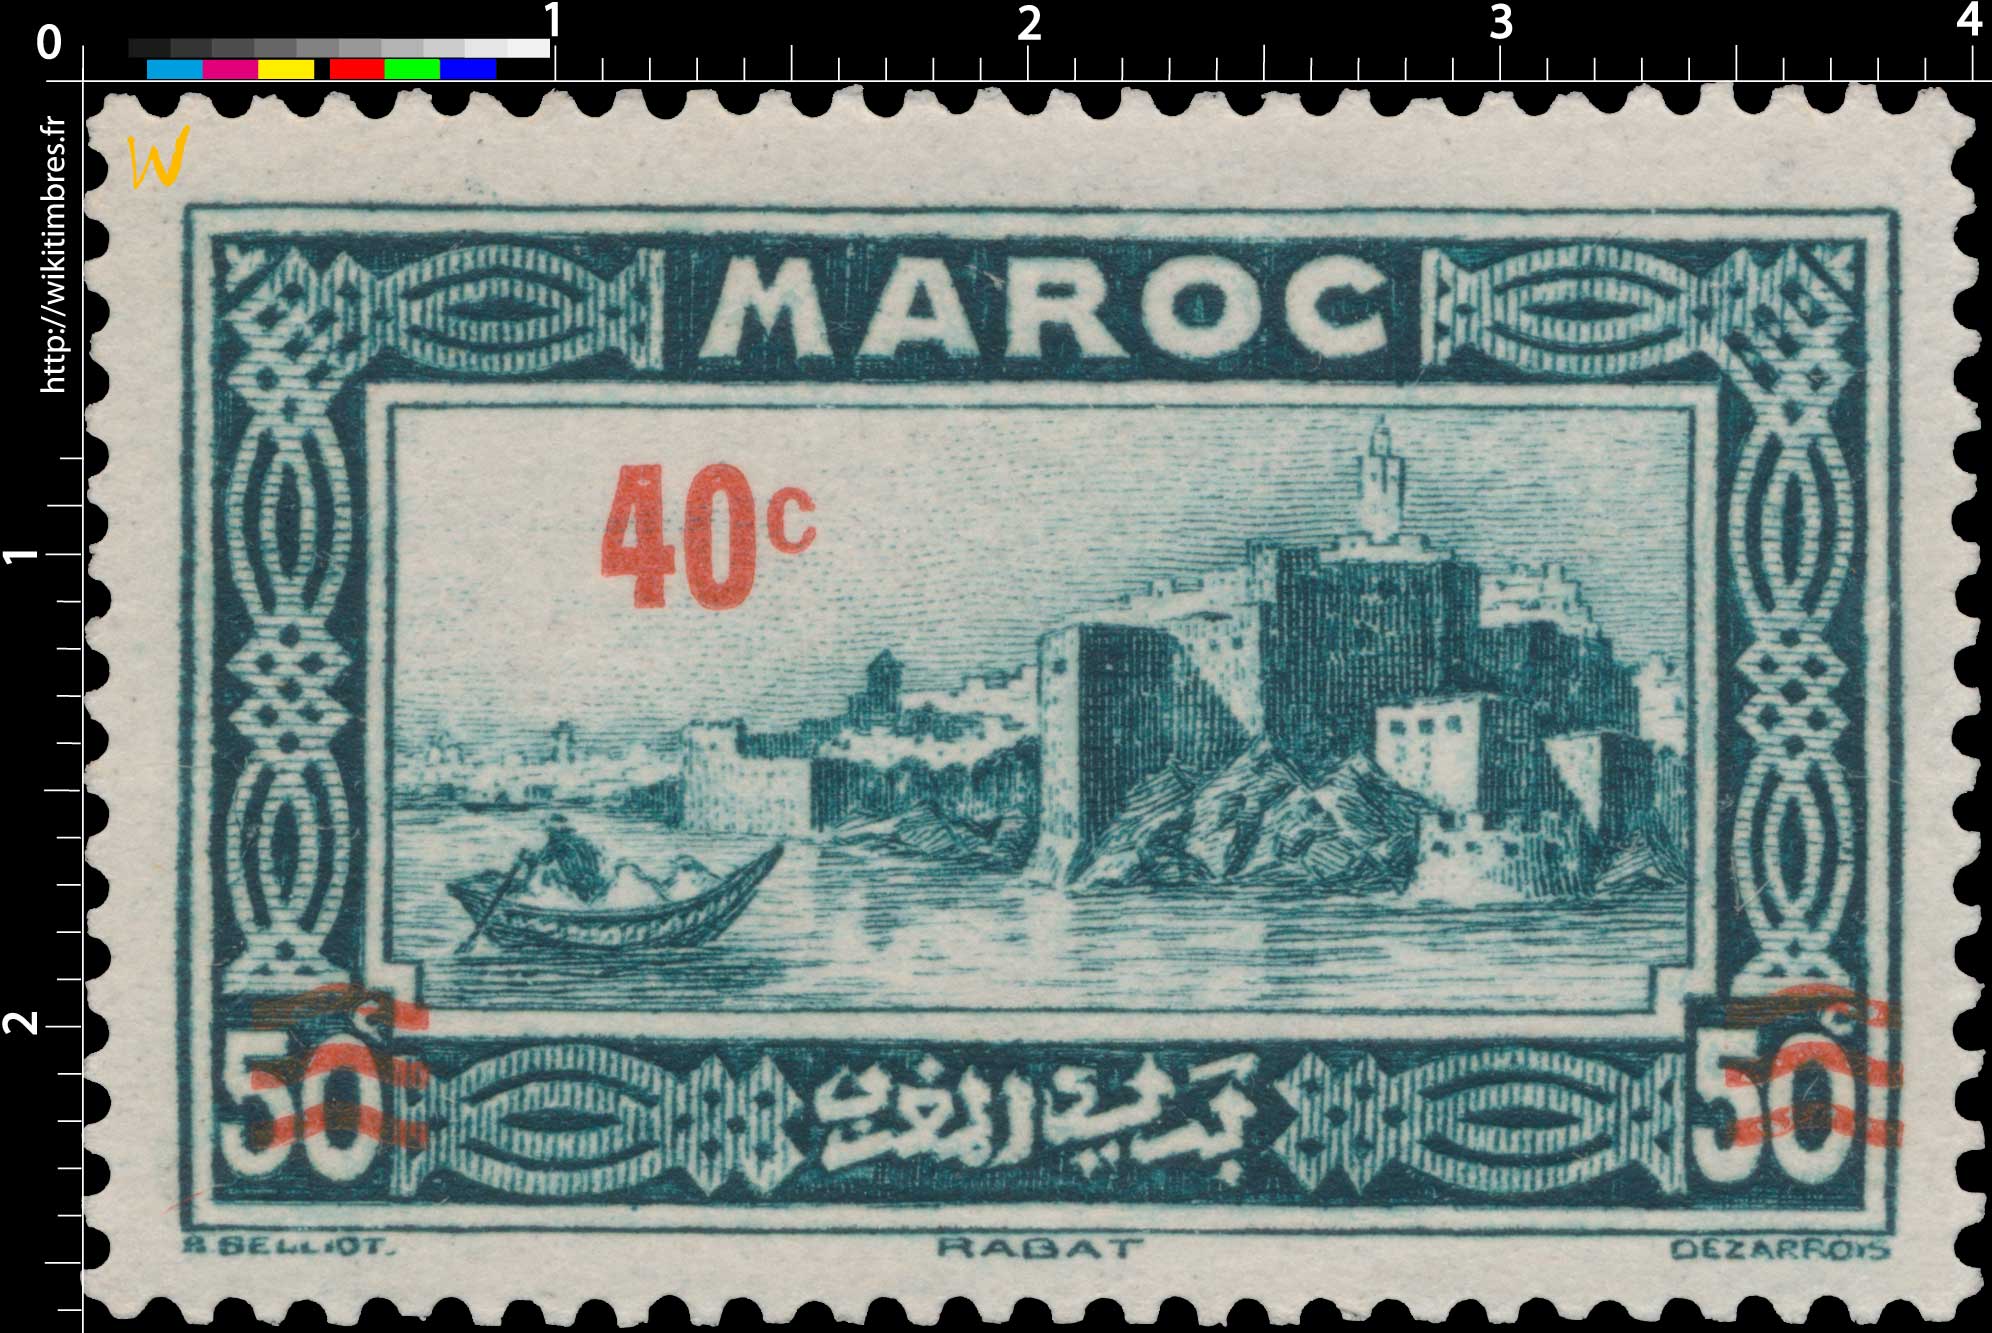 1939 Maroc - Kasbah des Oudaïas - Rabat